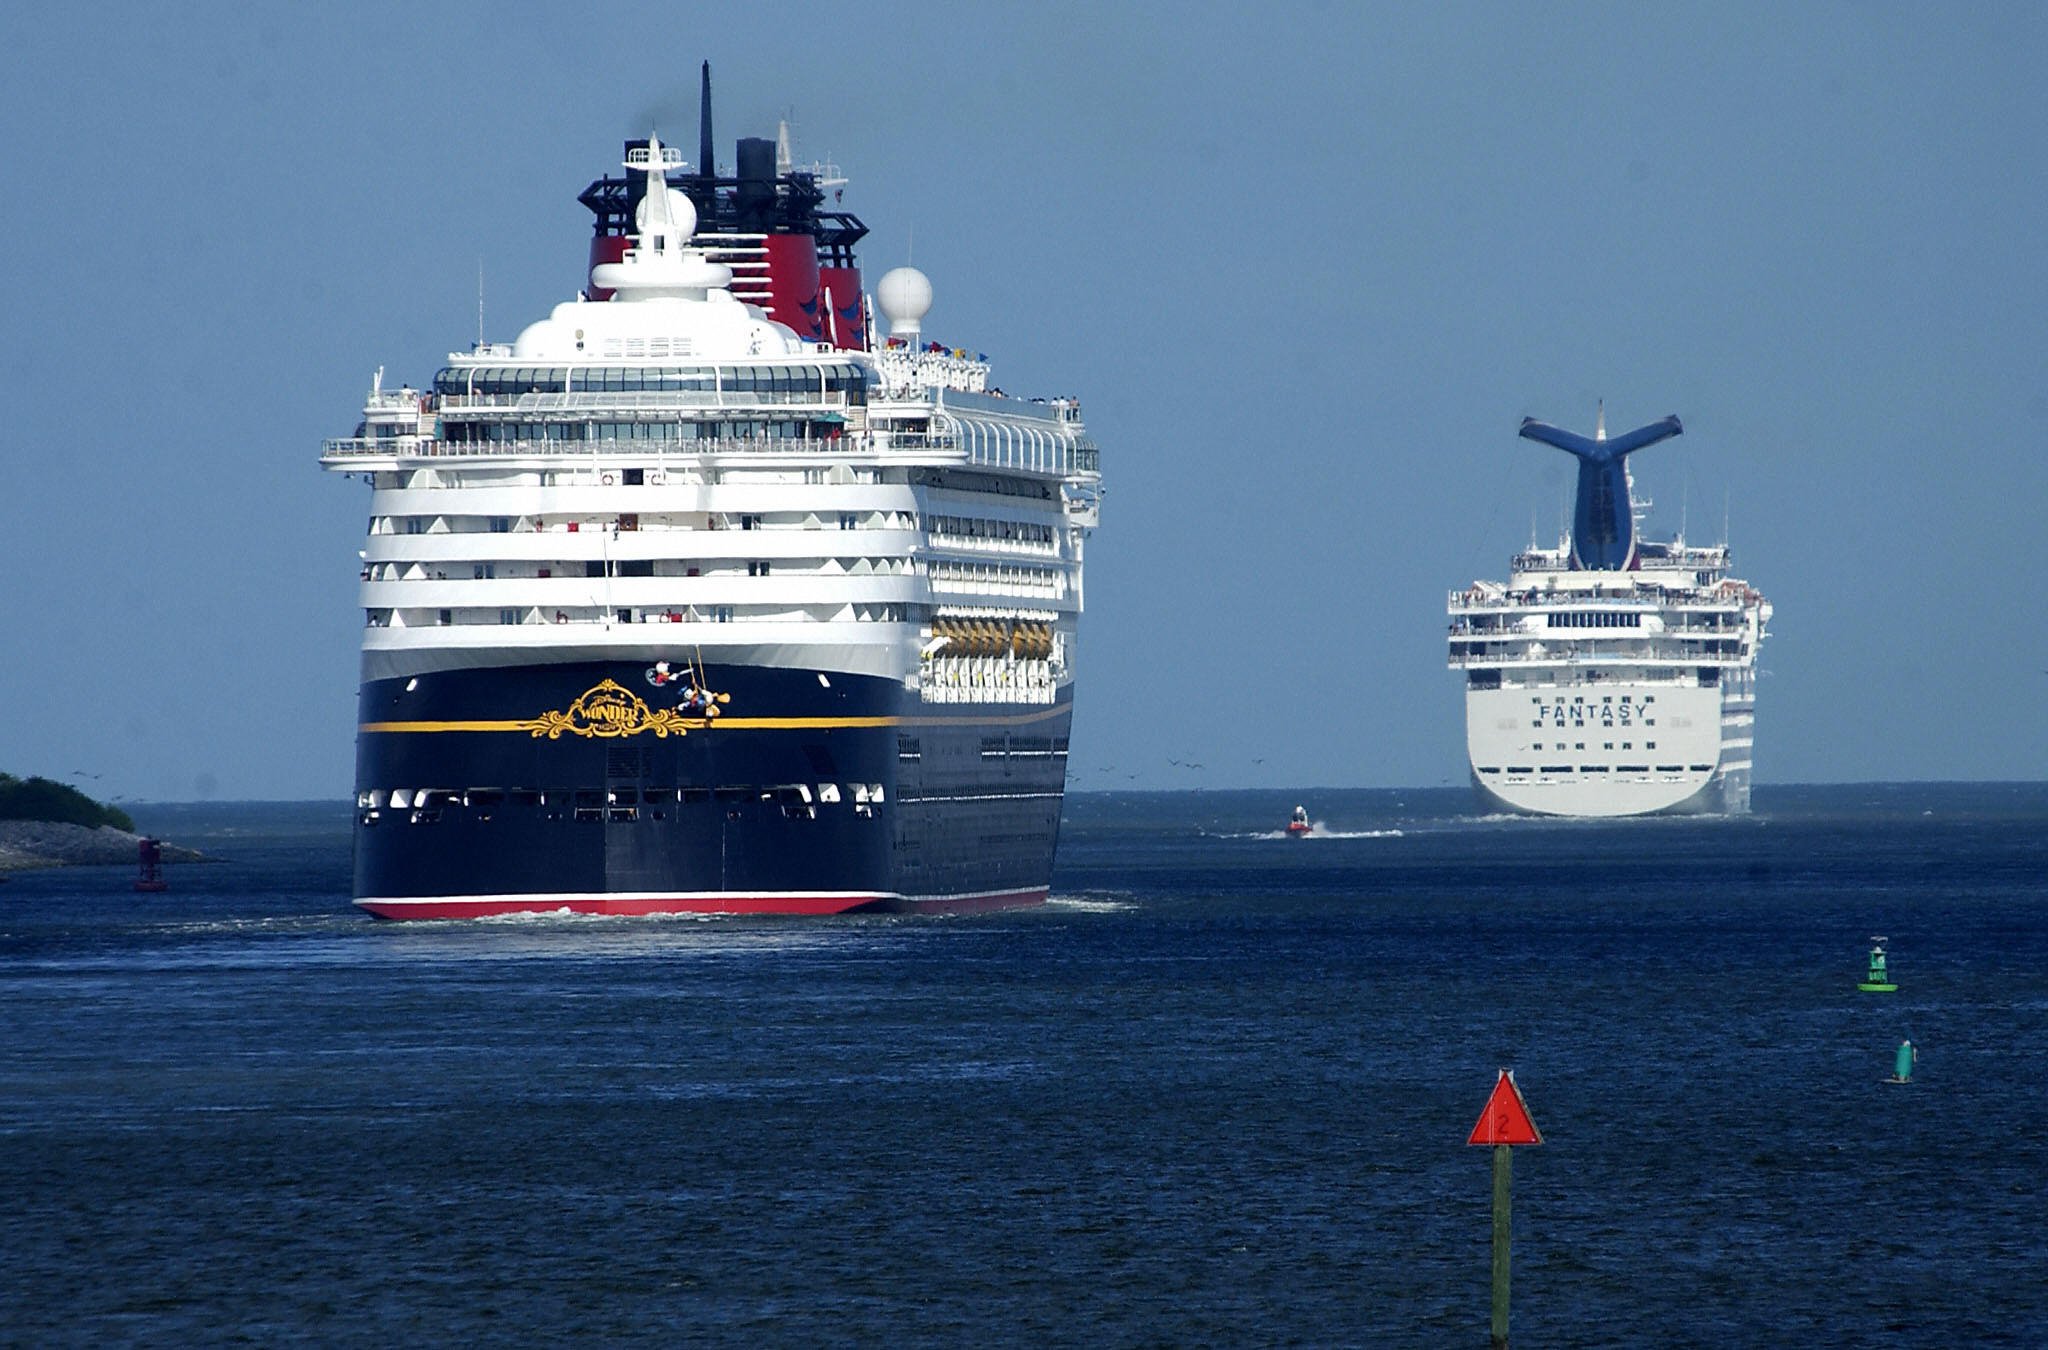 Two cruise ships